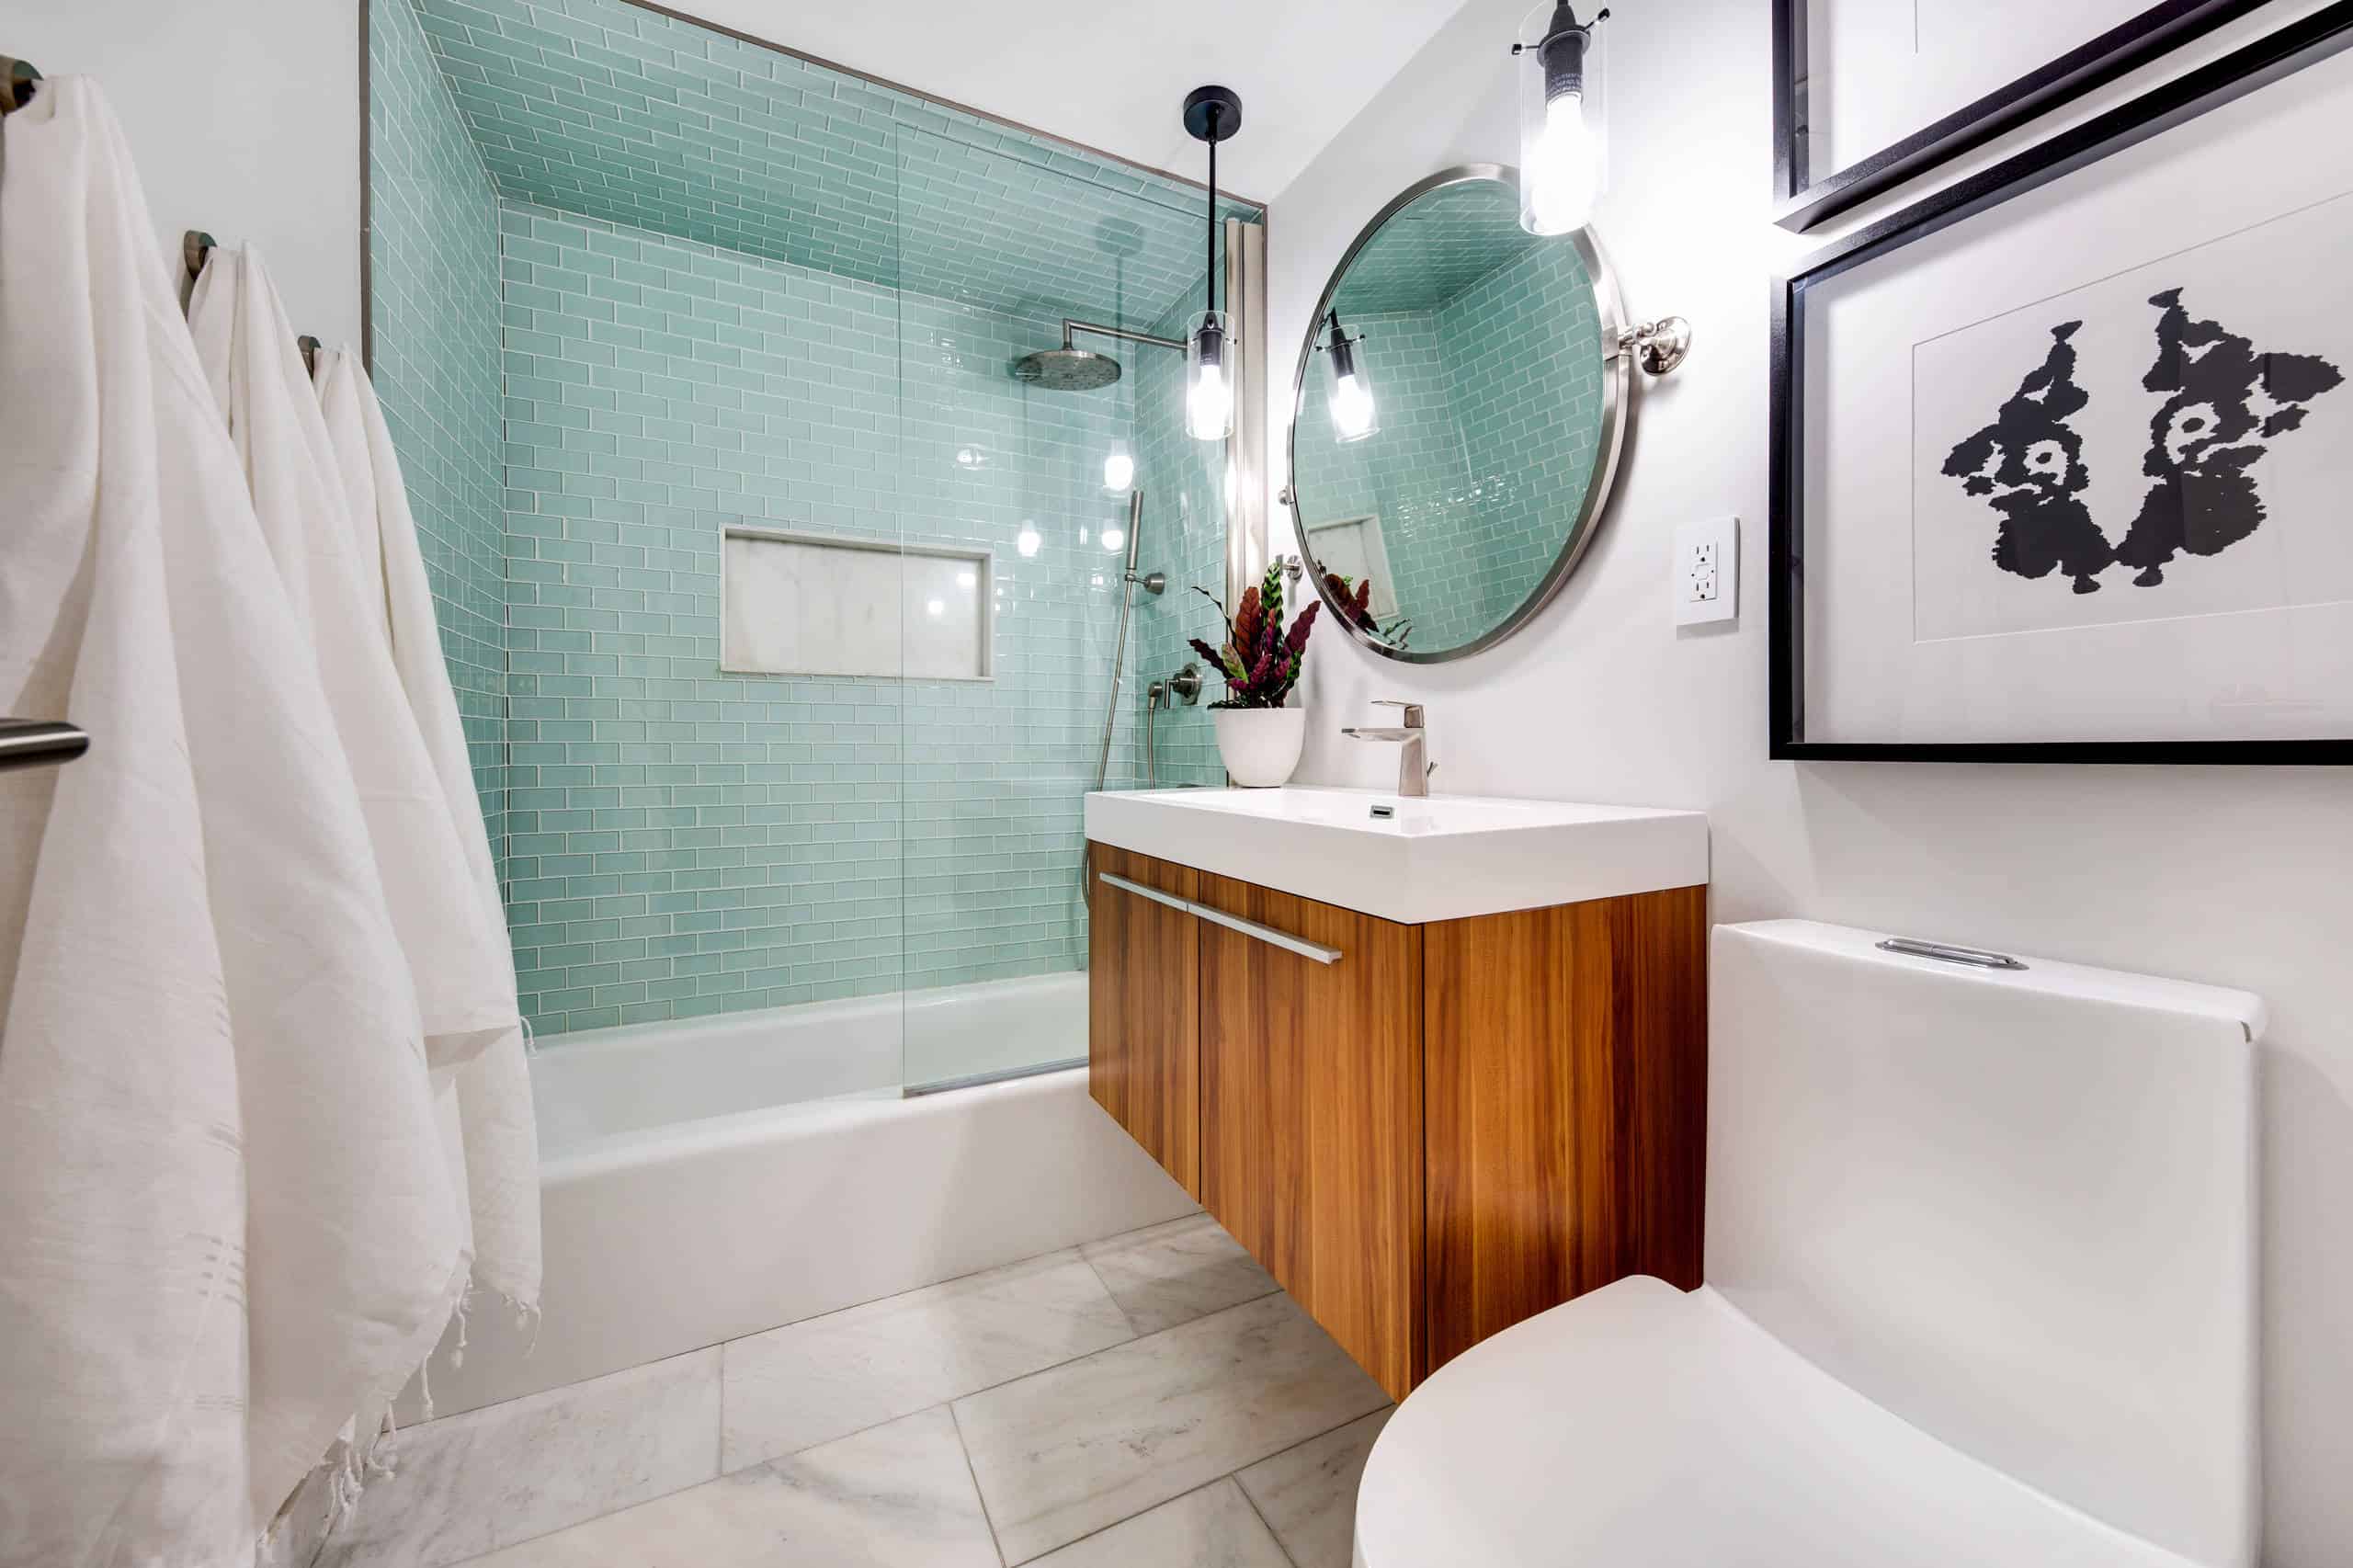 Top 28 Best Small Bathroom Ideas with Bathtubs for 2021 - 02 Small Bathroom Showers Decorsnob 1